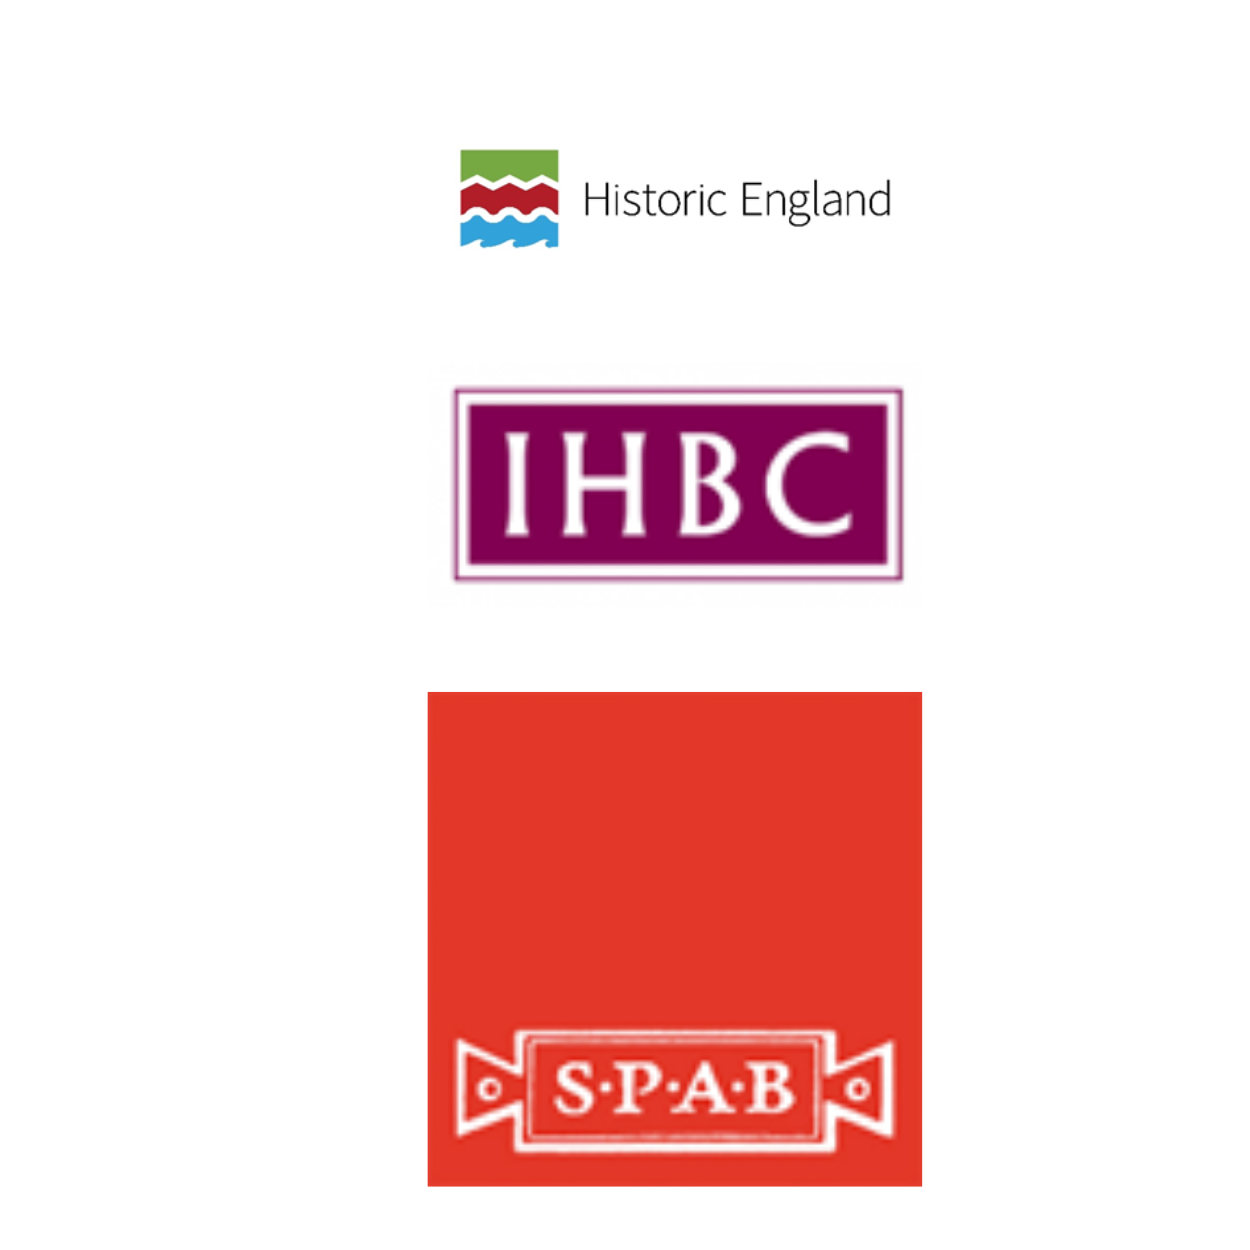 Historic England, IHBC, SPAB logos